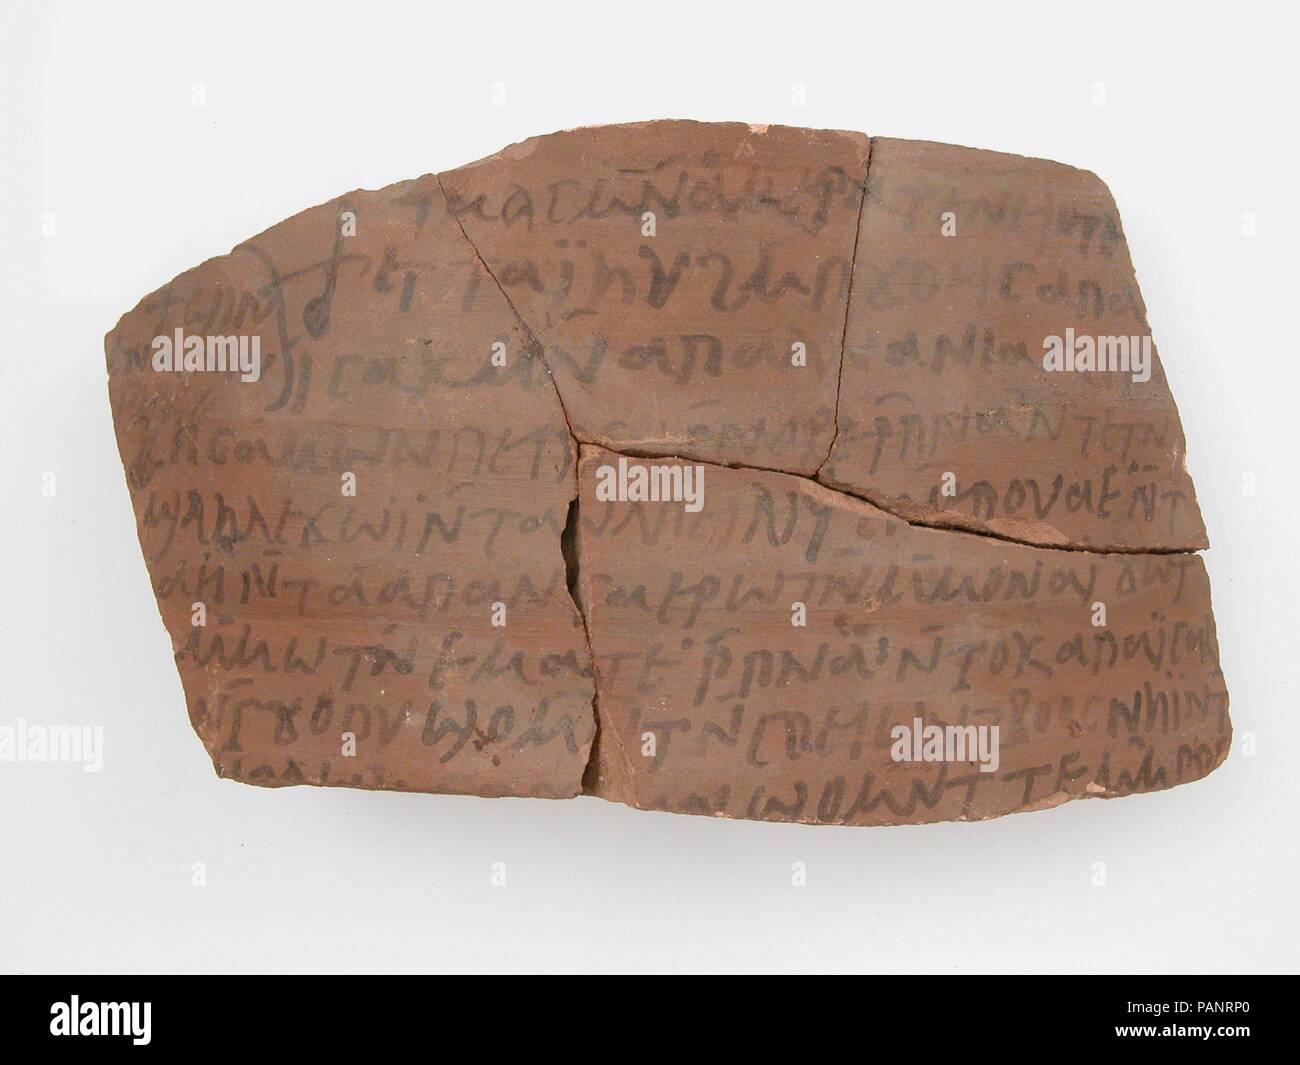 Ostrakon. Culture: Coptic. Dimensions: 5 15/16 x 3 7/16 in. (15.1 x 8.8 cm). Date: 7th century. Museum: Metropolitan Museum of Art, New York, USA. Stock Photo